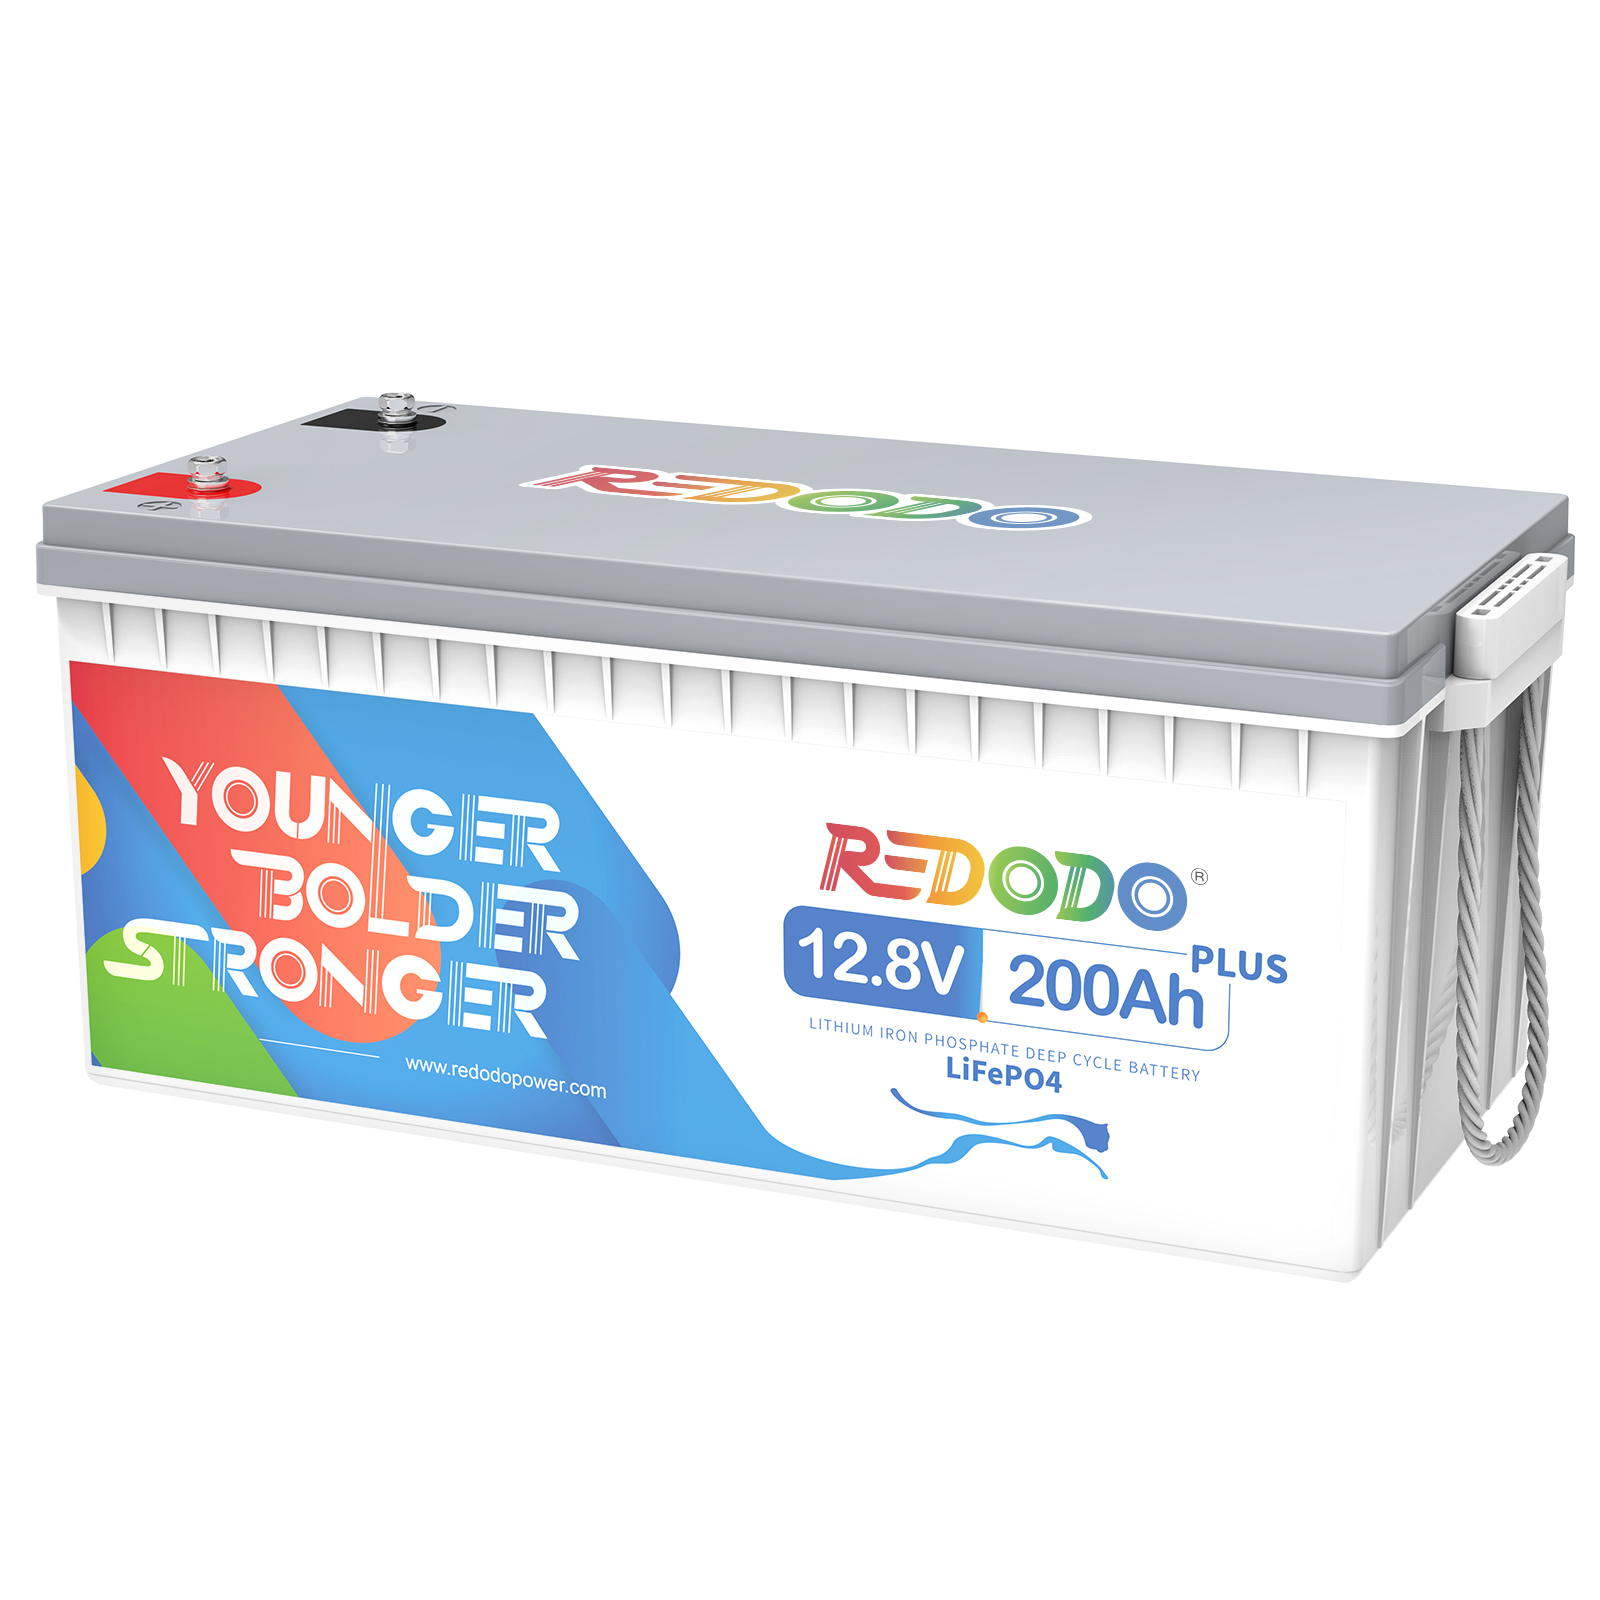 【Like New】Redodo 12V 200Ah Plus LiFePO4 Battery | 2.56kWh & 2.56kW Redodo Power